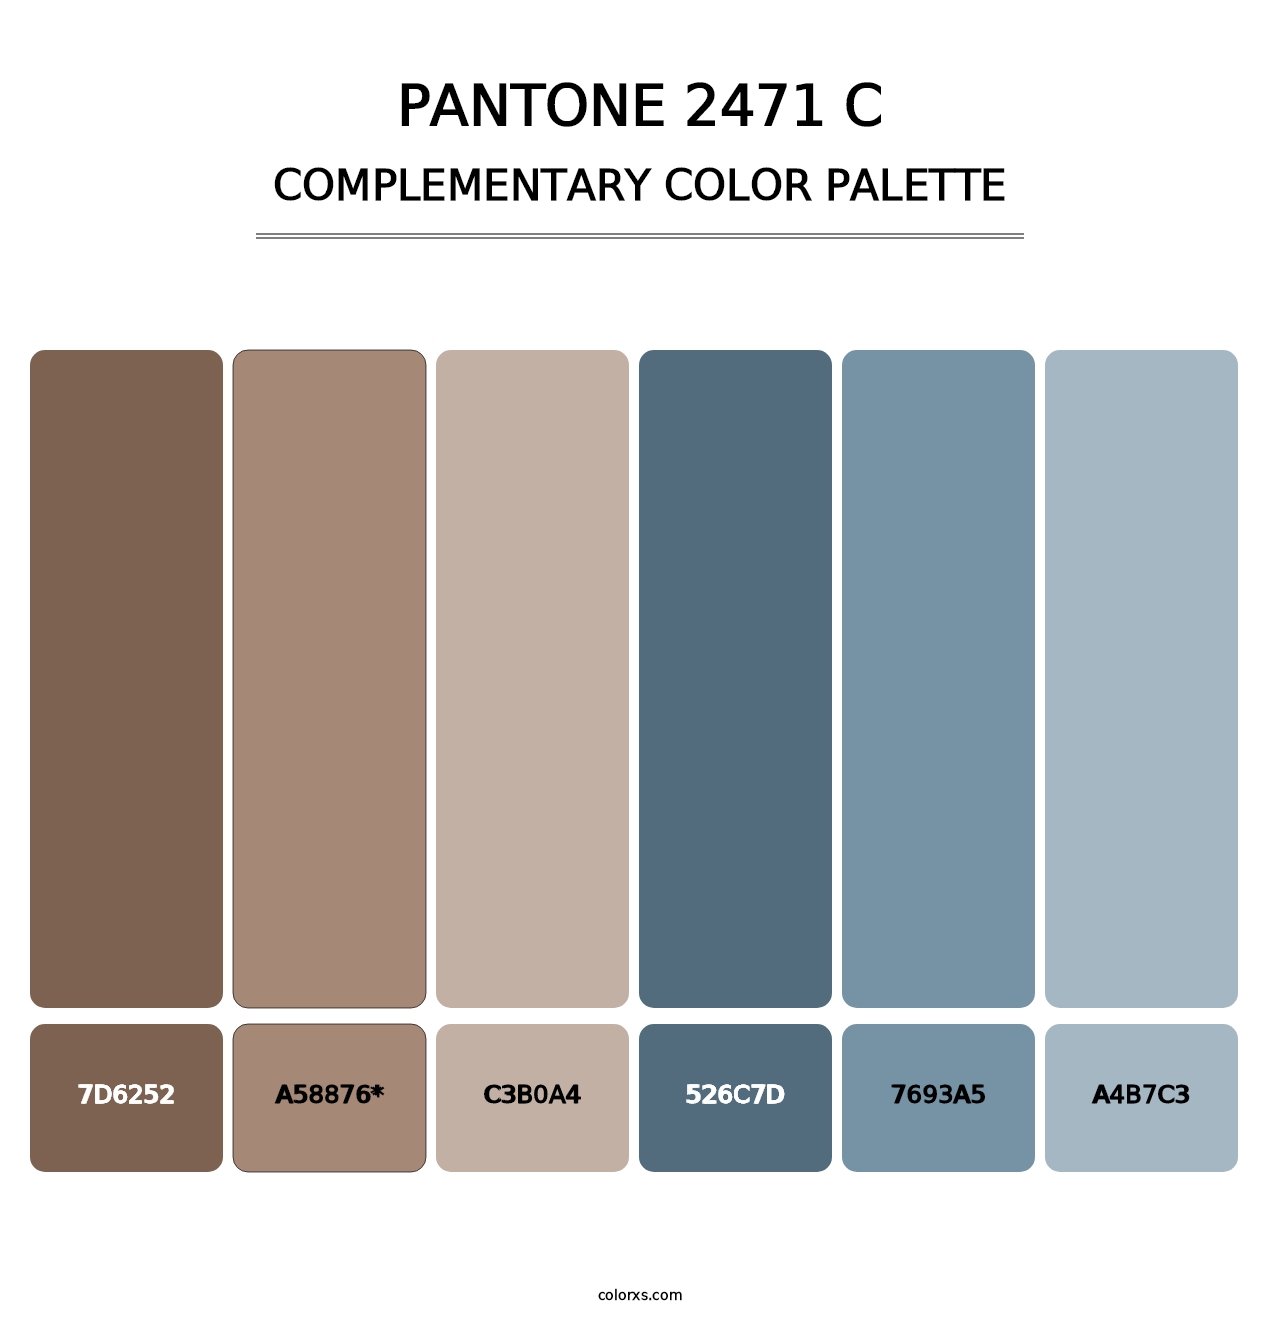 PANTONE 2471 C - Complementary Color Palette